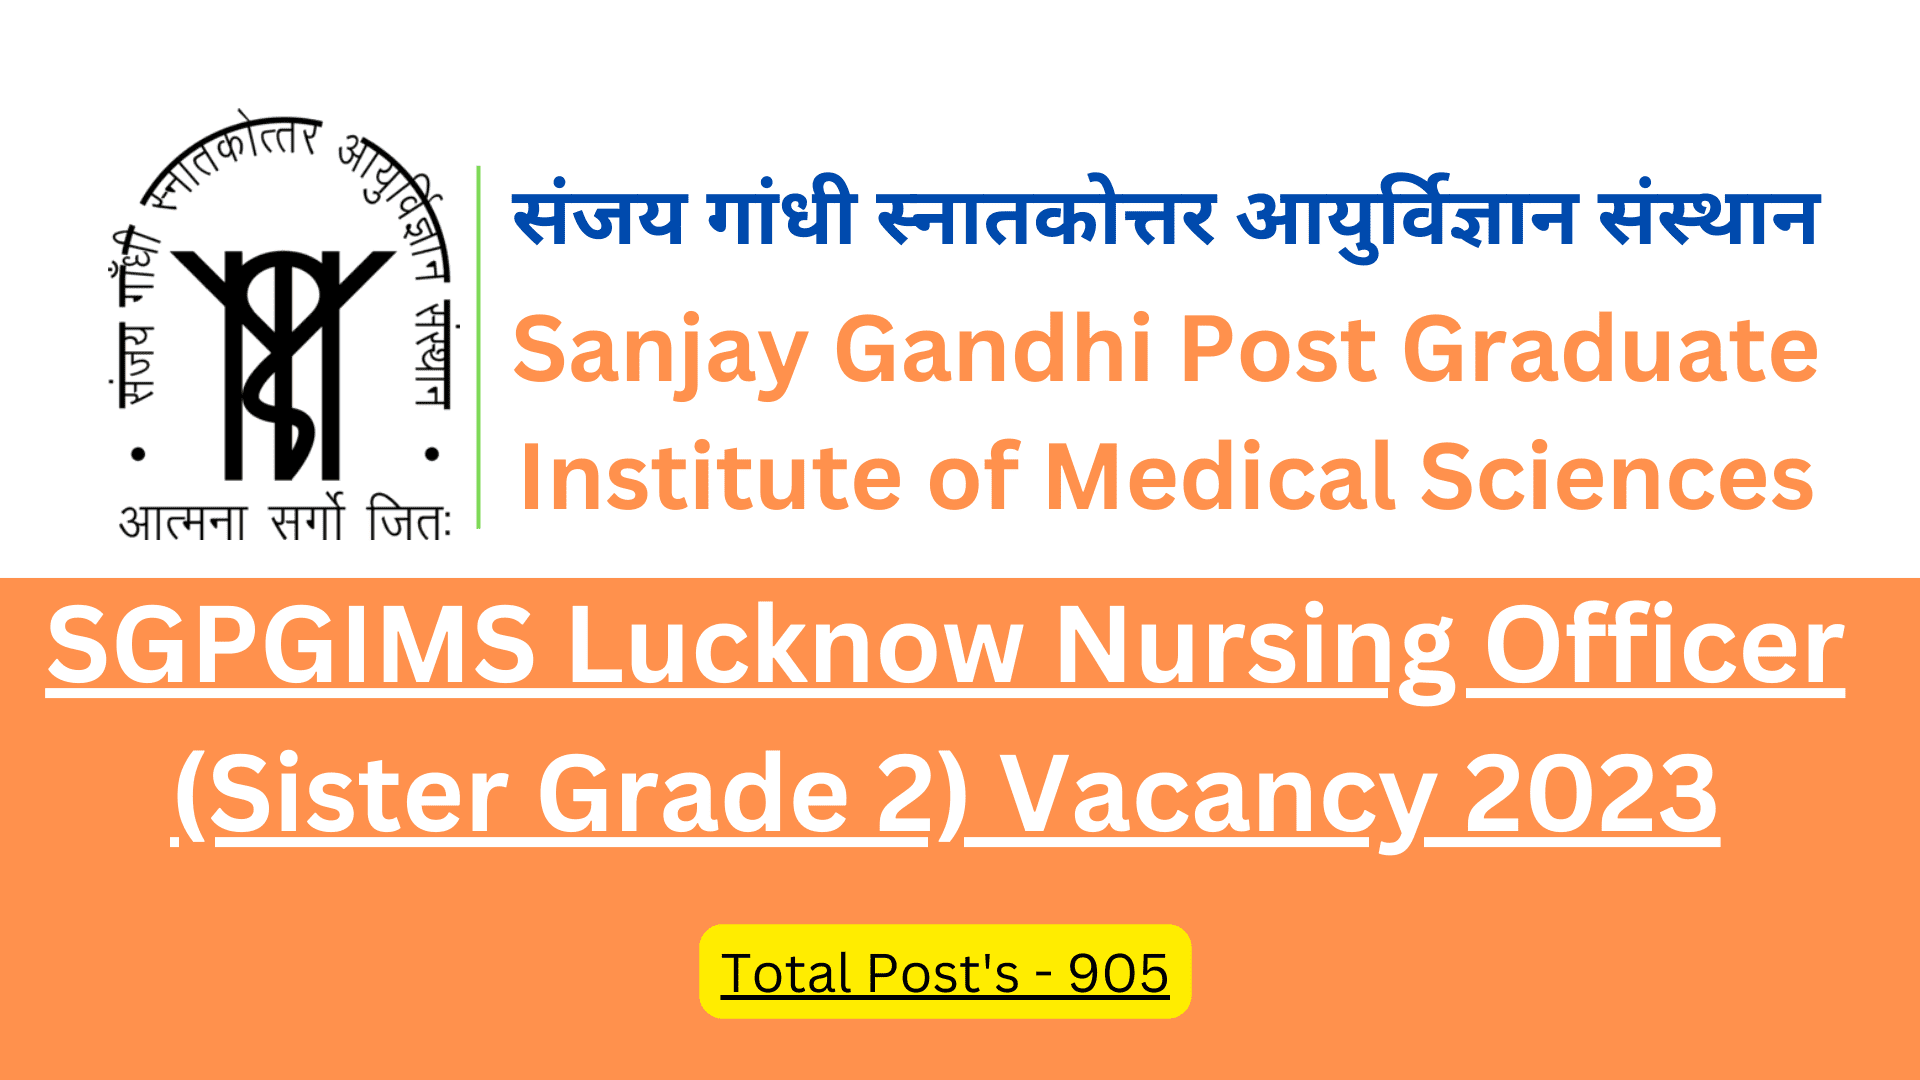 SGPGIMS Lucknow Sister Grade 2 Recruitment 2023